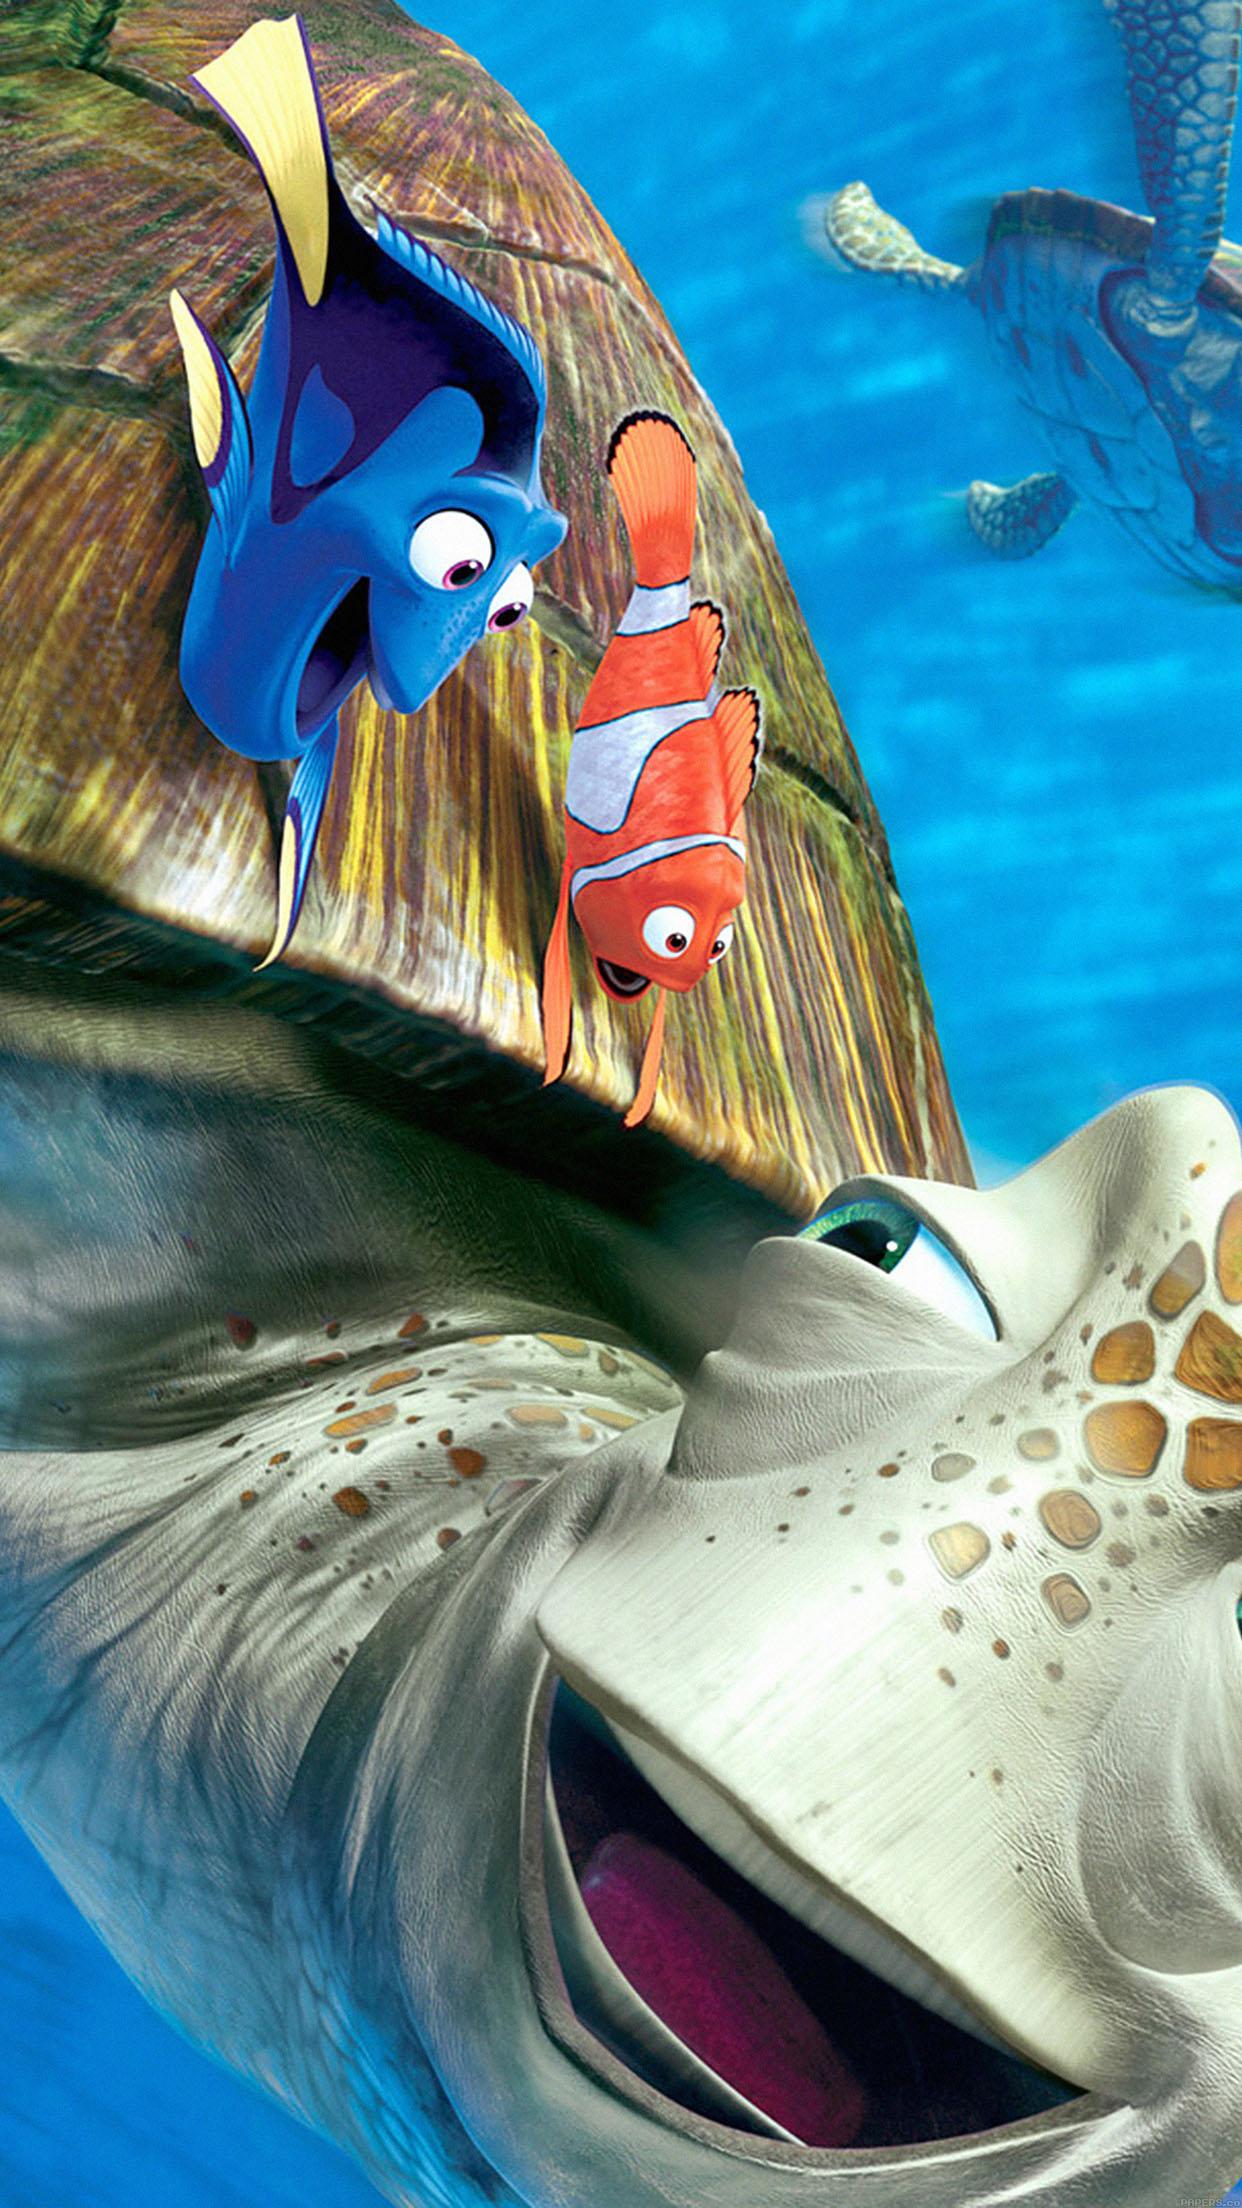 Wallpaper Finding Nemo Disney Pixar Illust Sea Animals